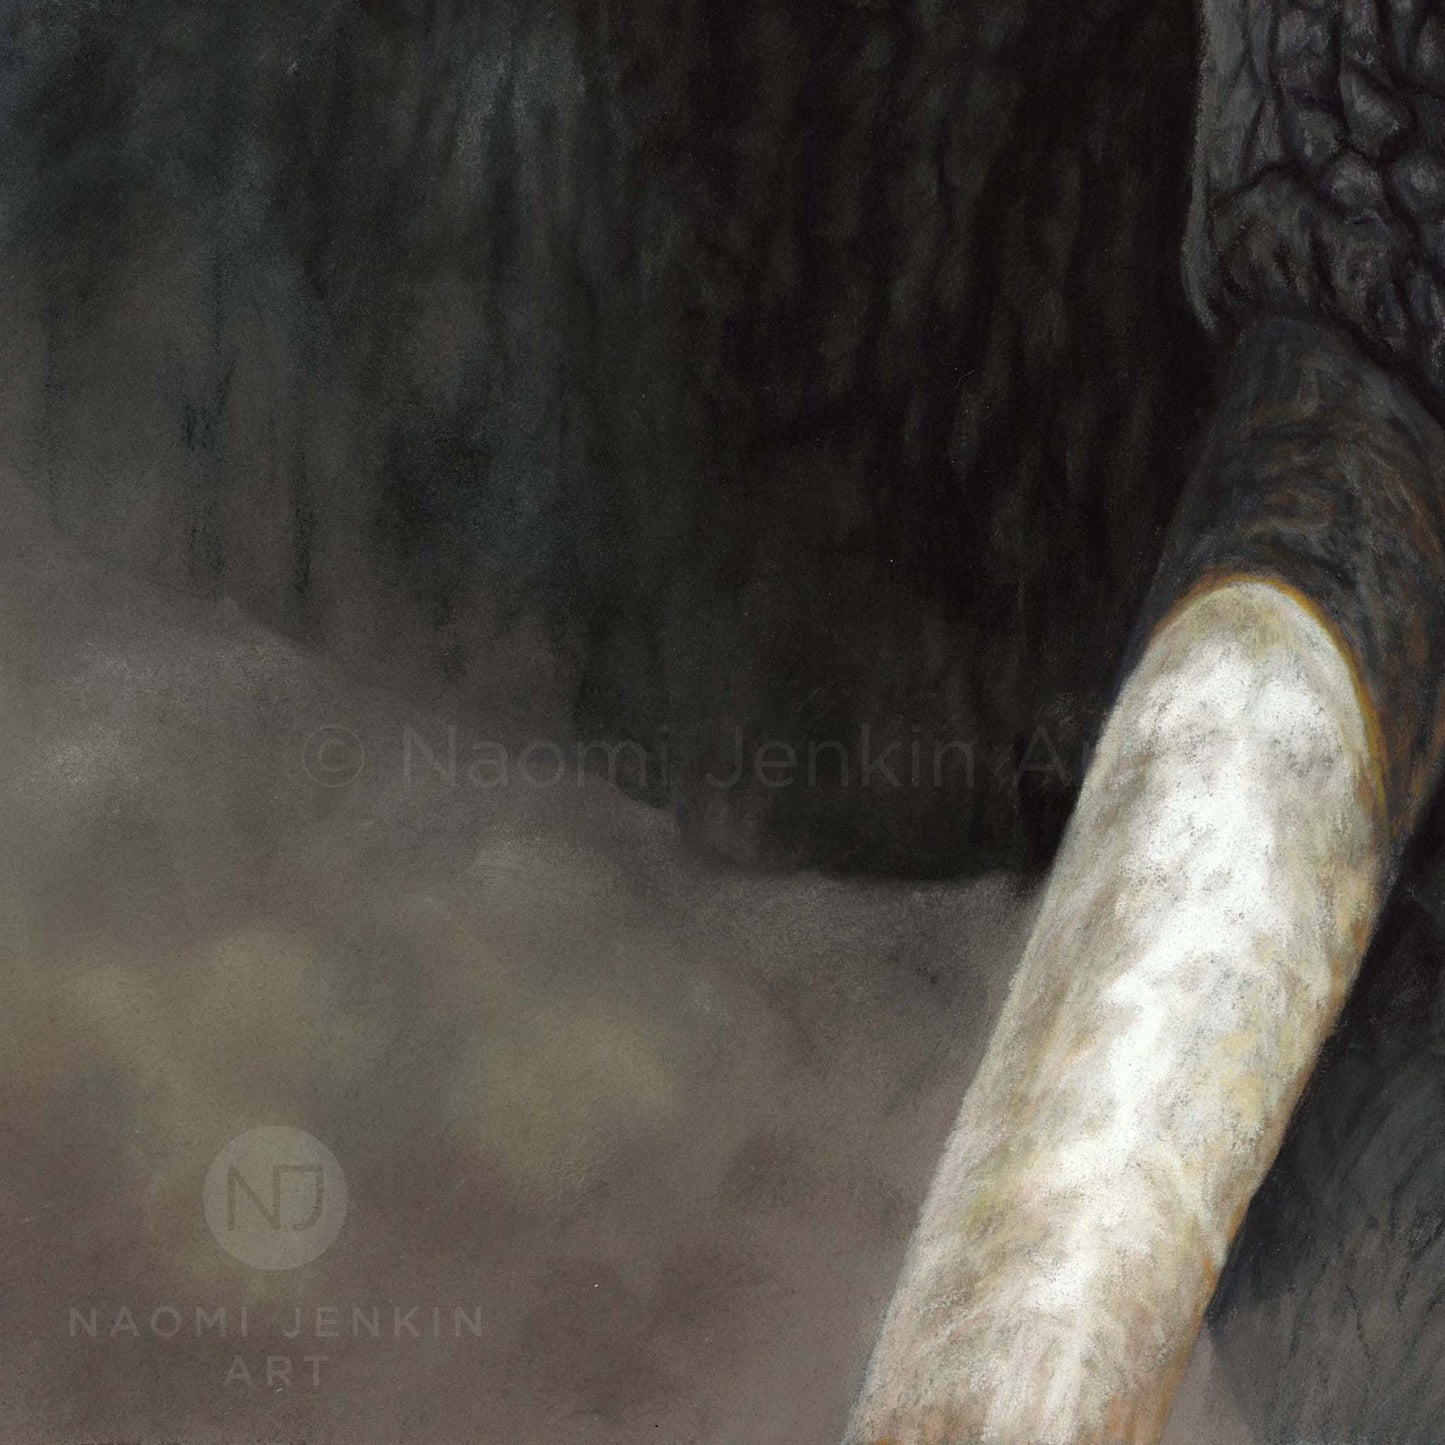 Close-up of elephant tusk artwork by Naomi Jenkin